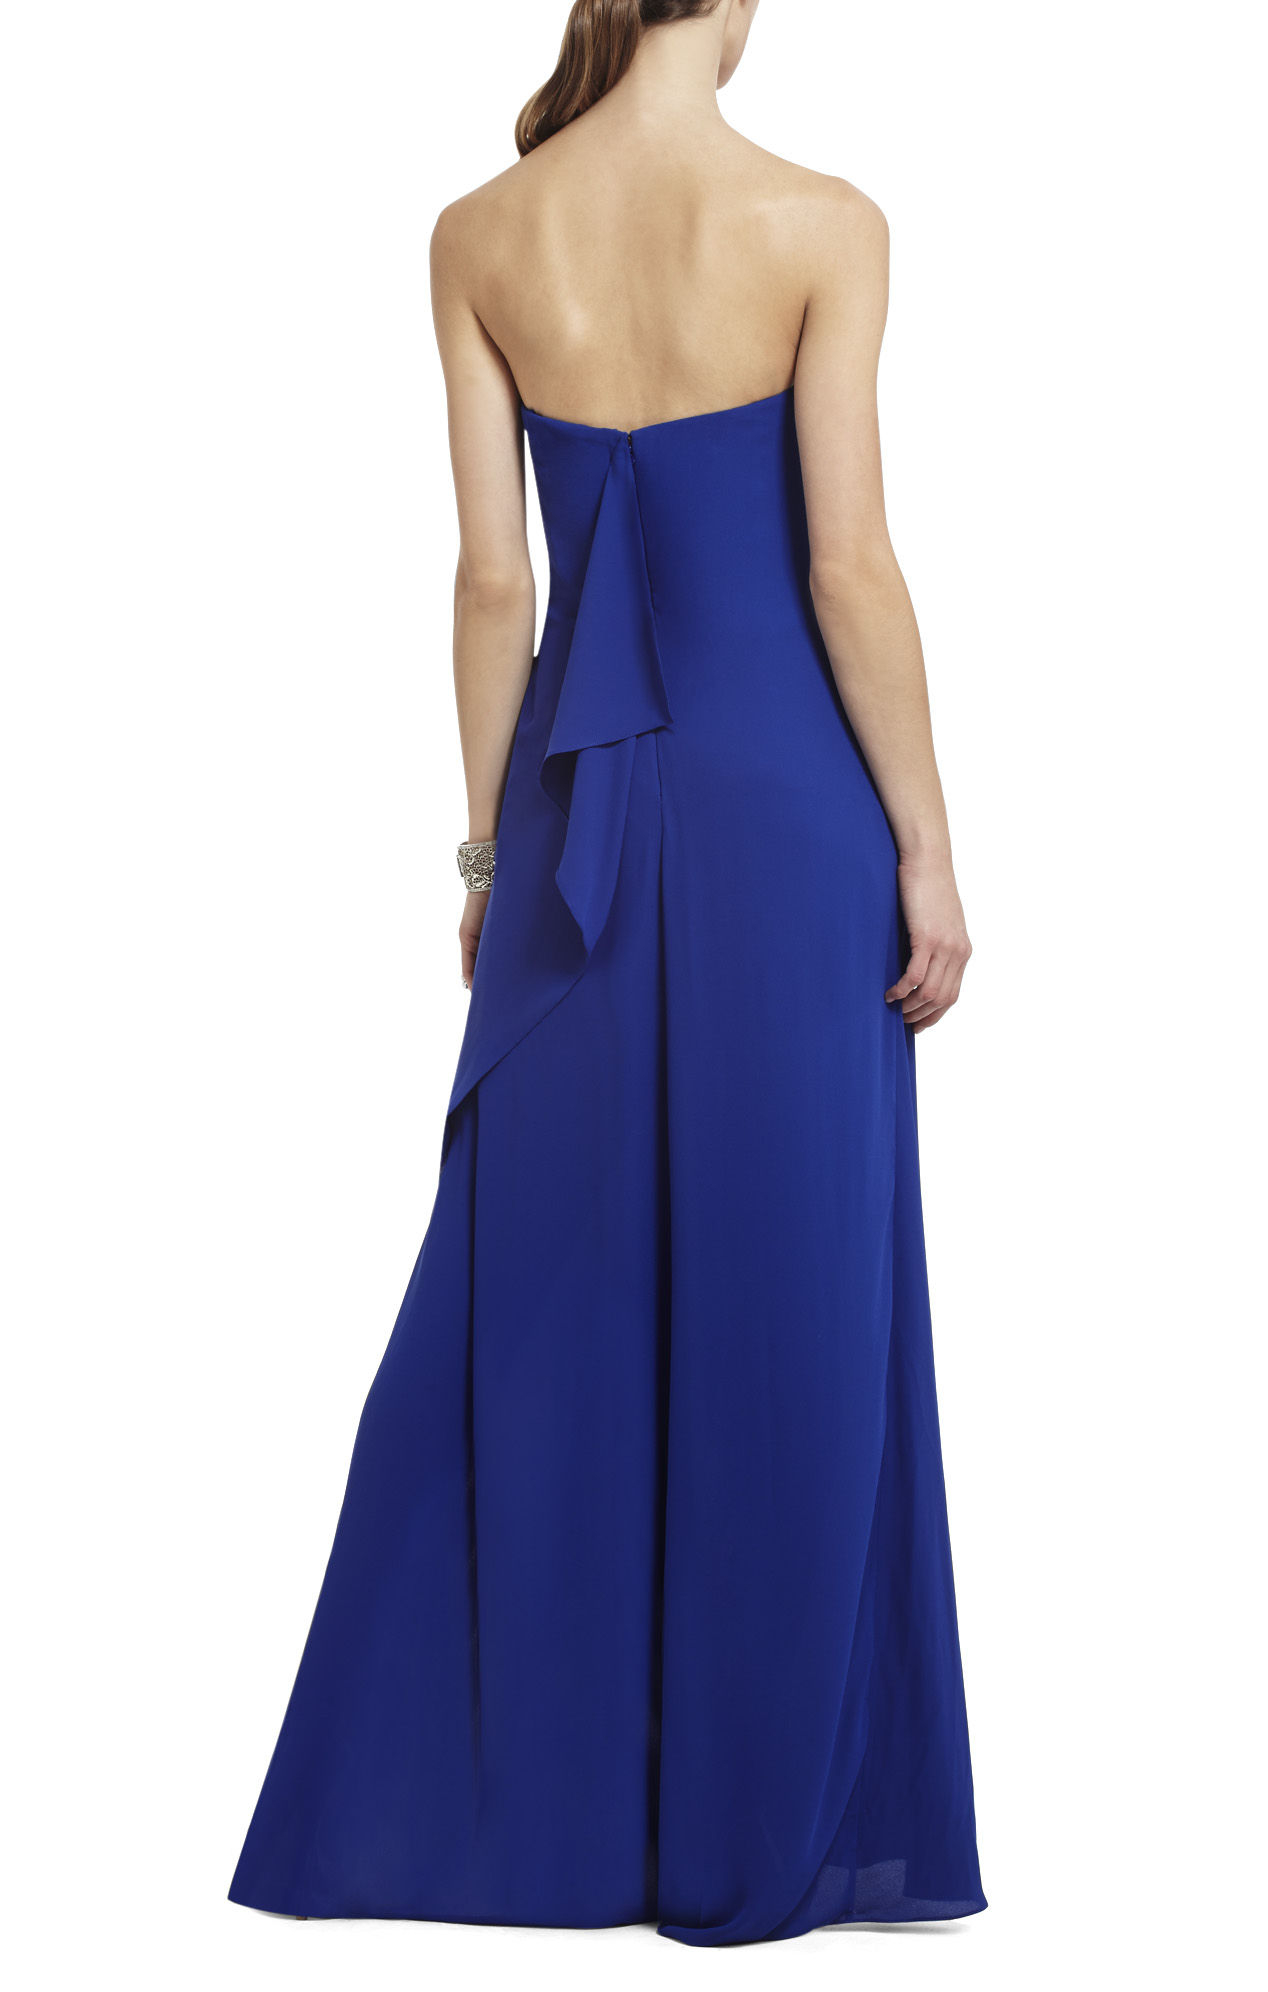 BCBGMAXAZRIA Grace Strapless Gown in Blue - Lyst